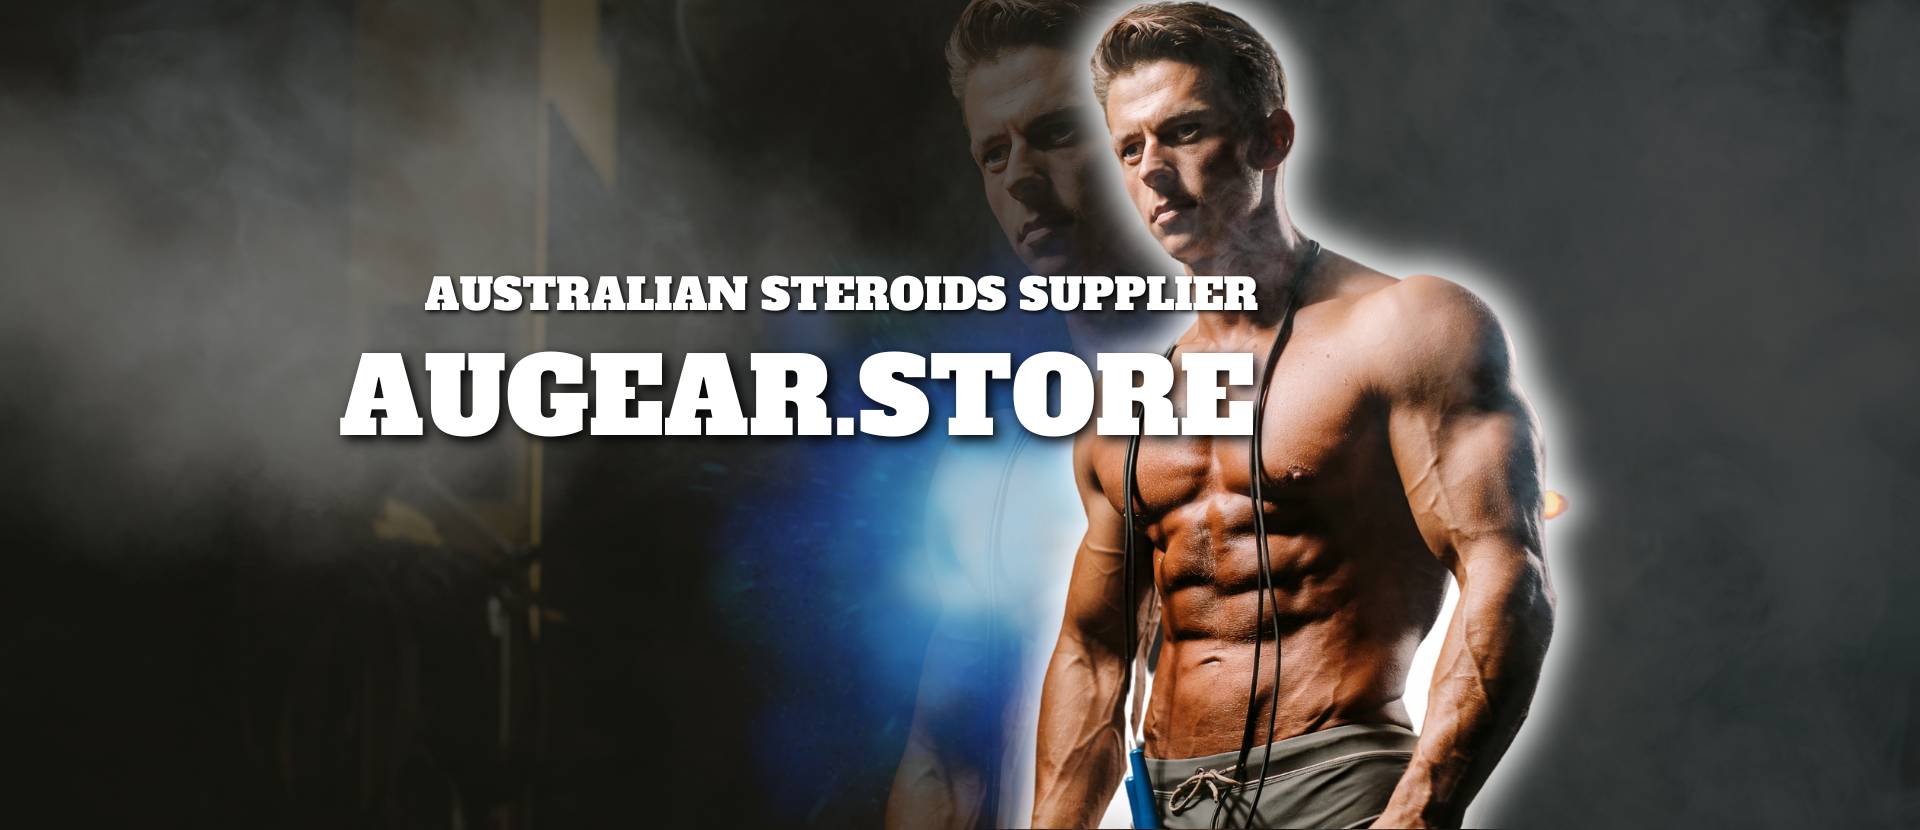 Australian Steroids Supplier